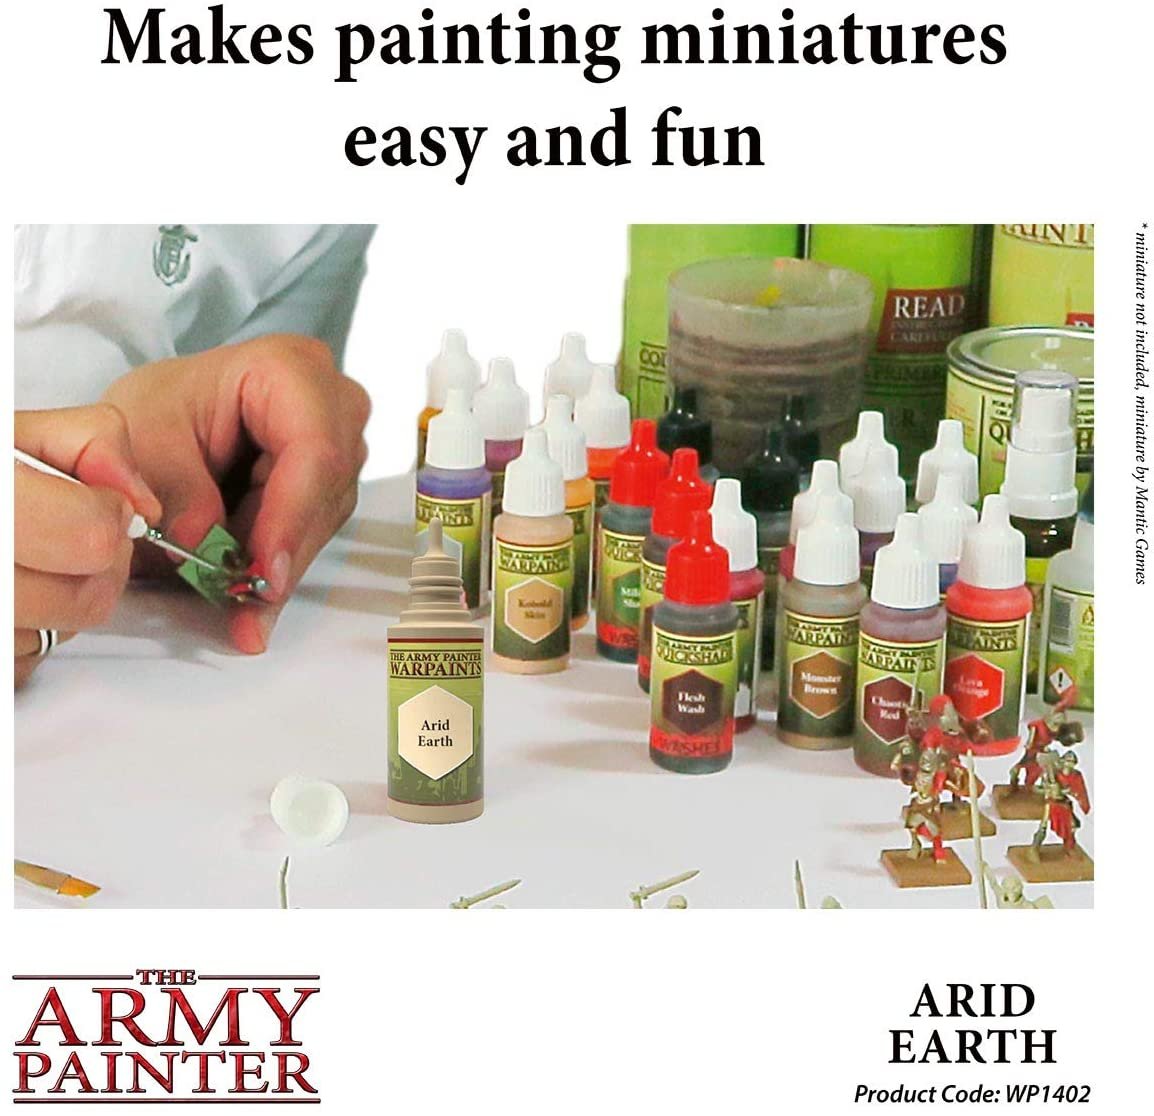 The Army Painter - Warpaints: Arid Earth (18ml/0.6oz)